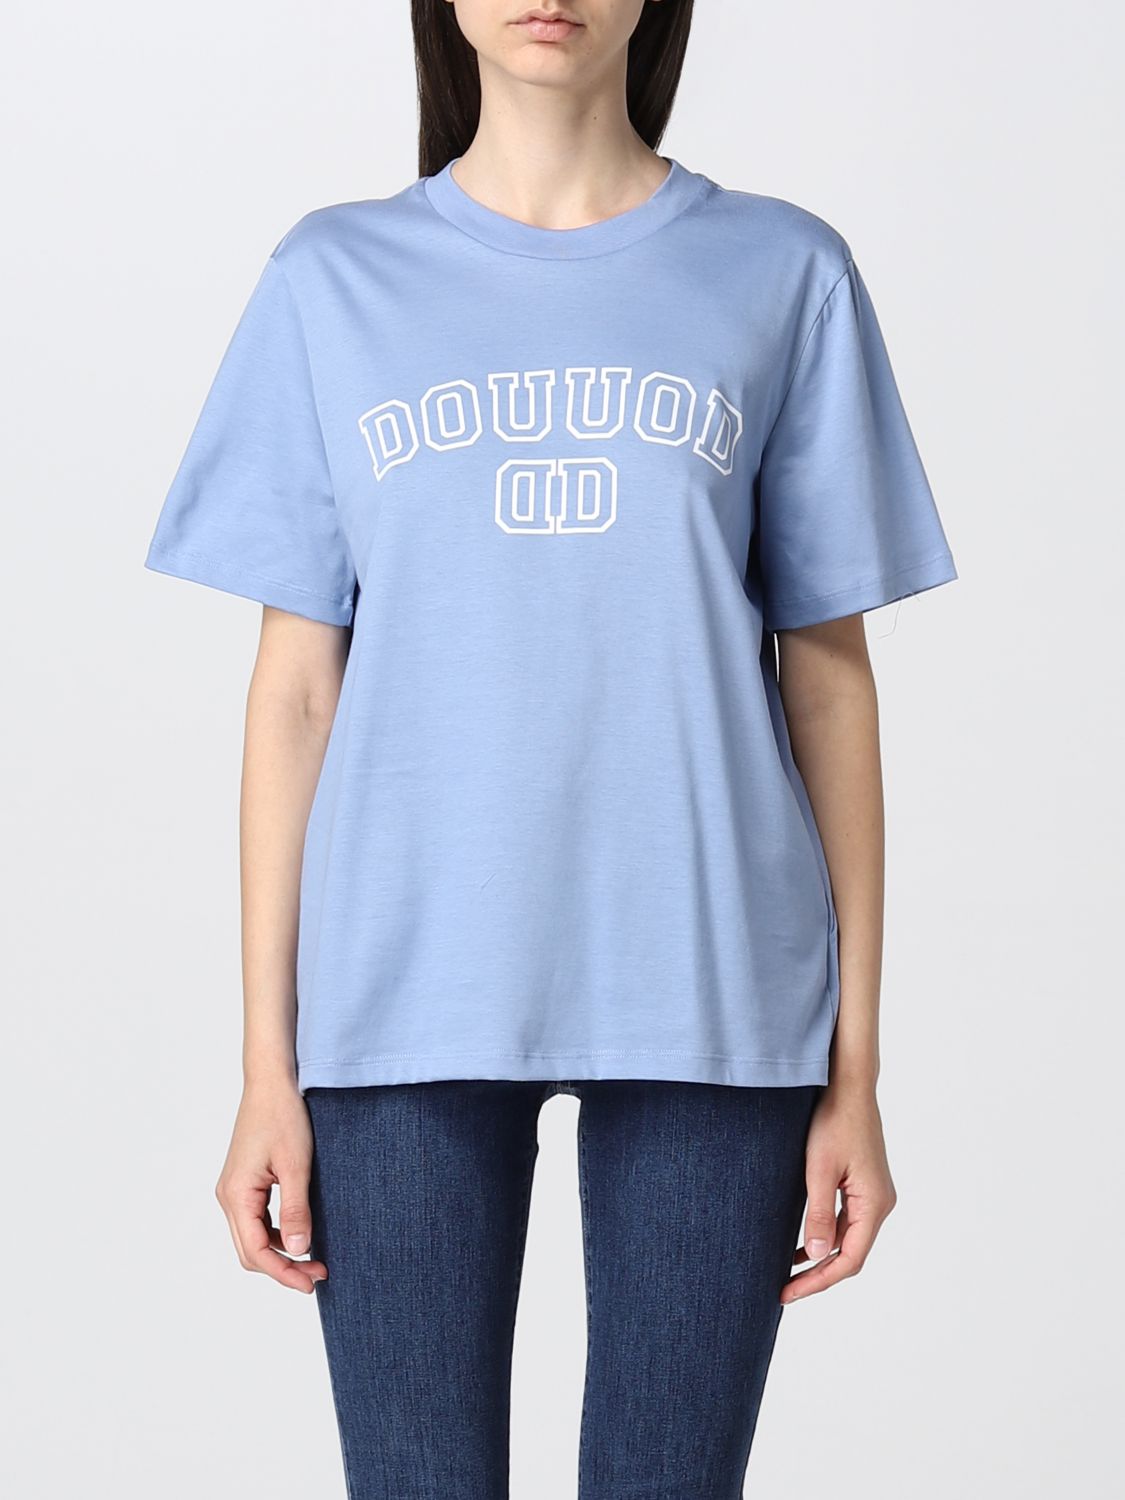 Tシャツ Douuod: Tシャツ Douuod レディース アジュール 1